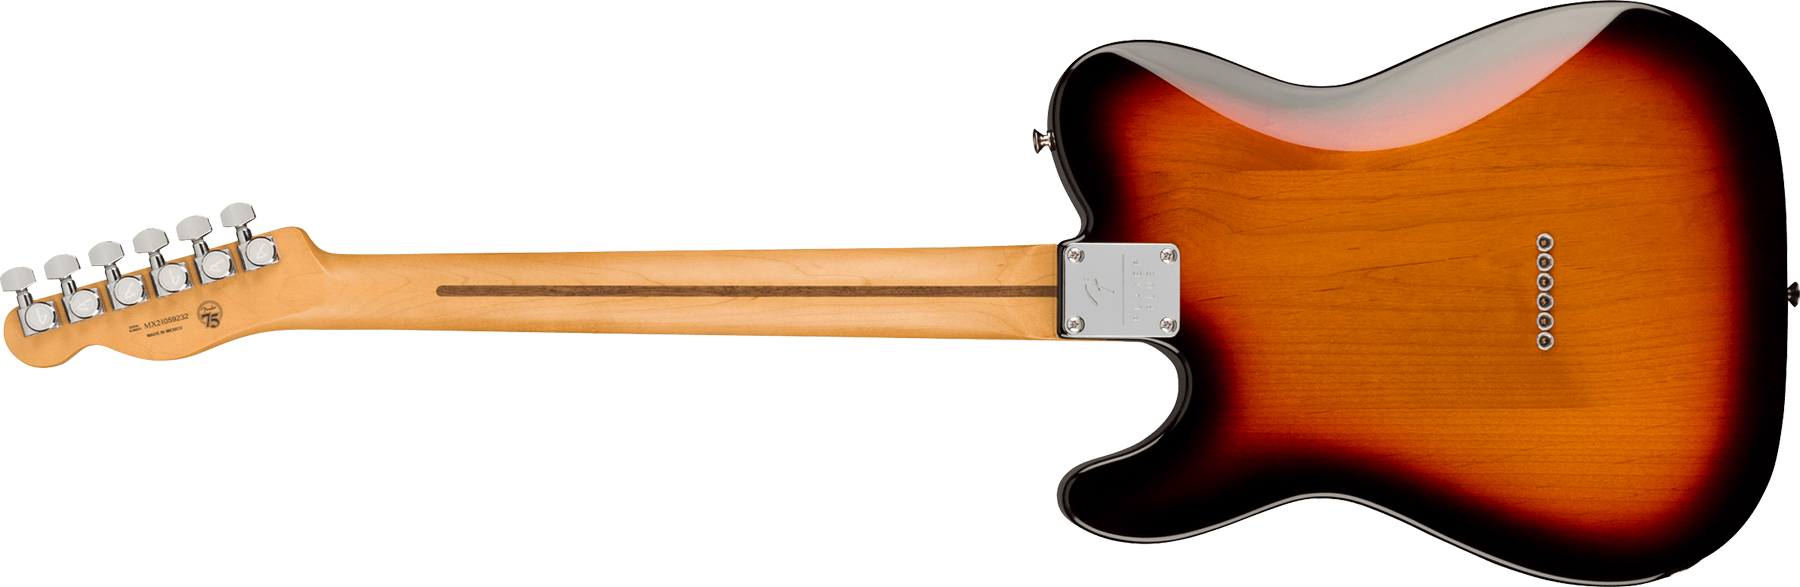 Fender Tele Player Plus Nashville Mex 3s Ht Mn - 3-color Sunburst - Tel shape electric guitar - Variation 1